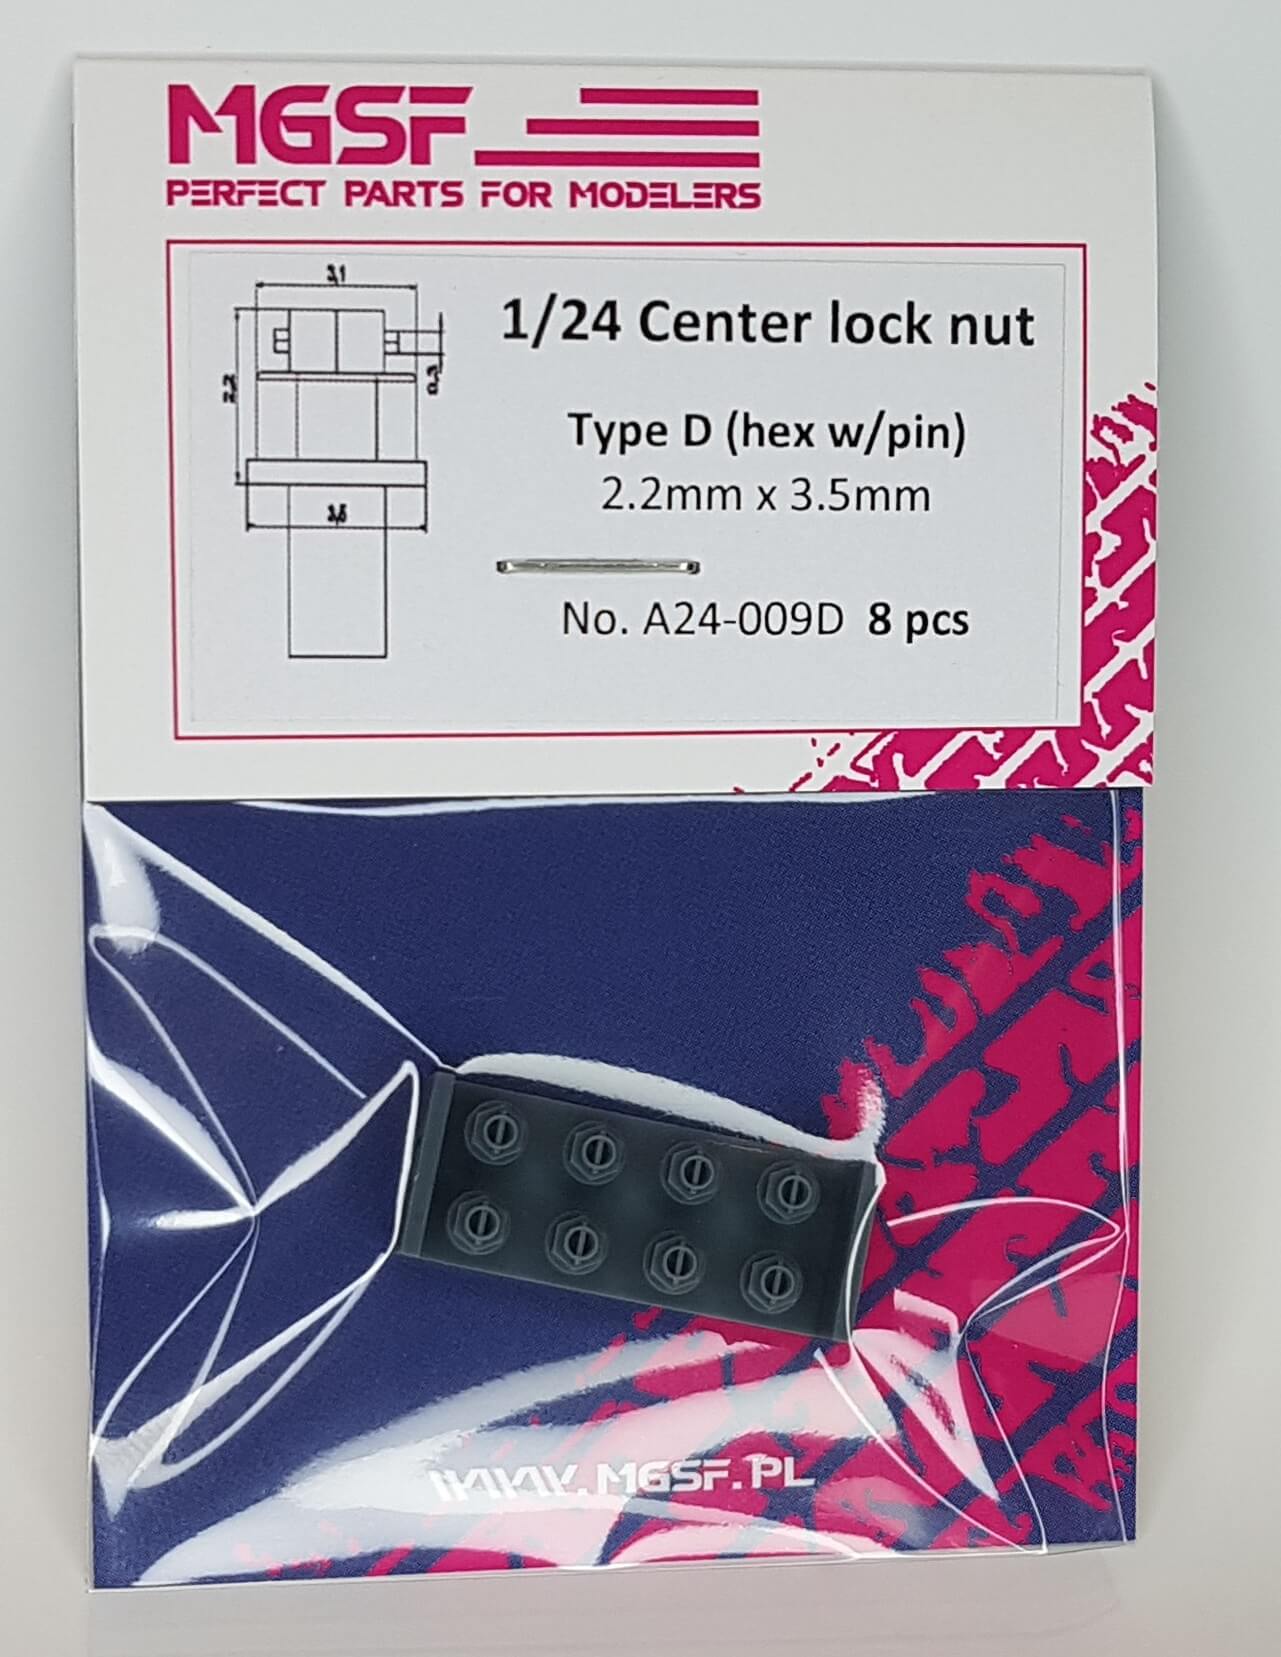 CENTER LOCK NUT - TYPE D HEX W/PIN